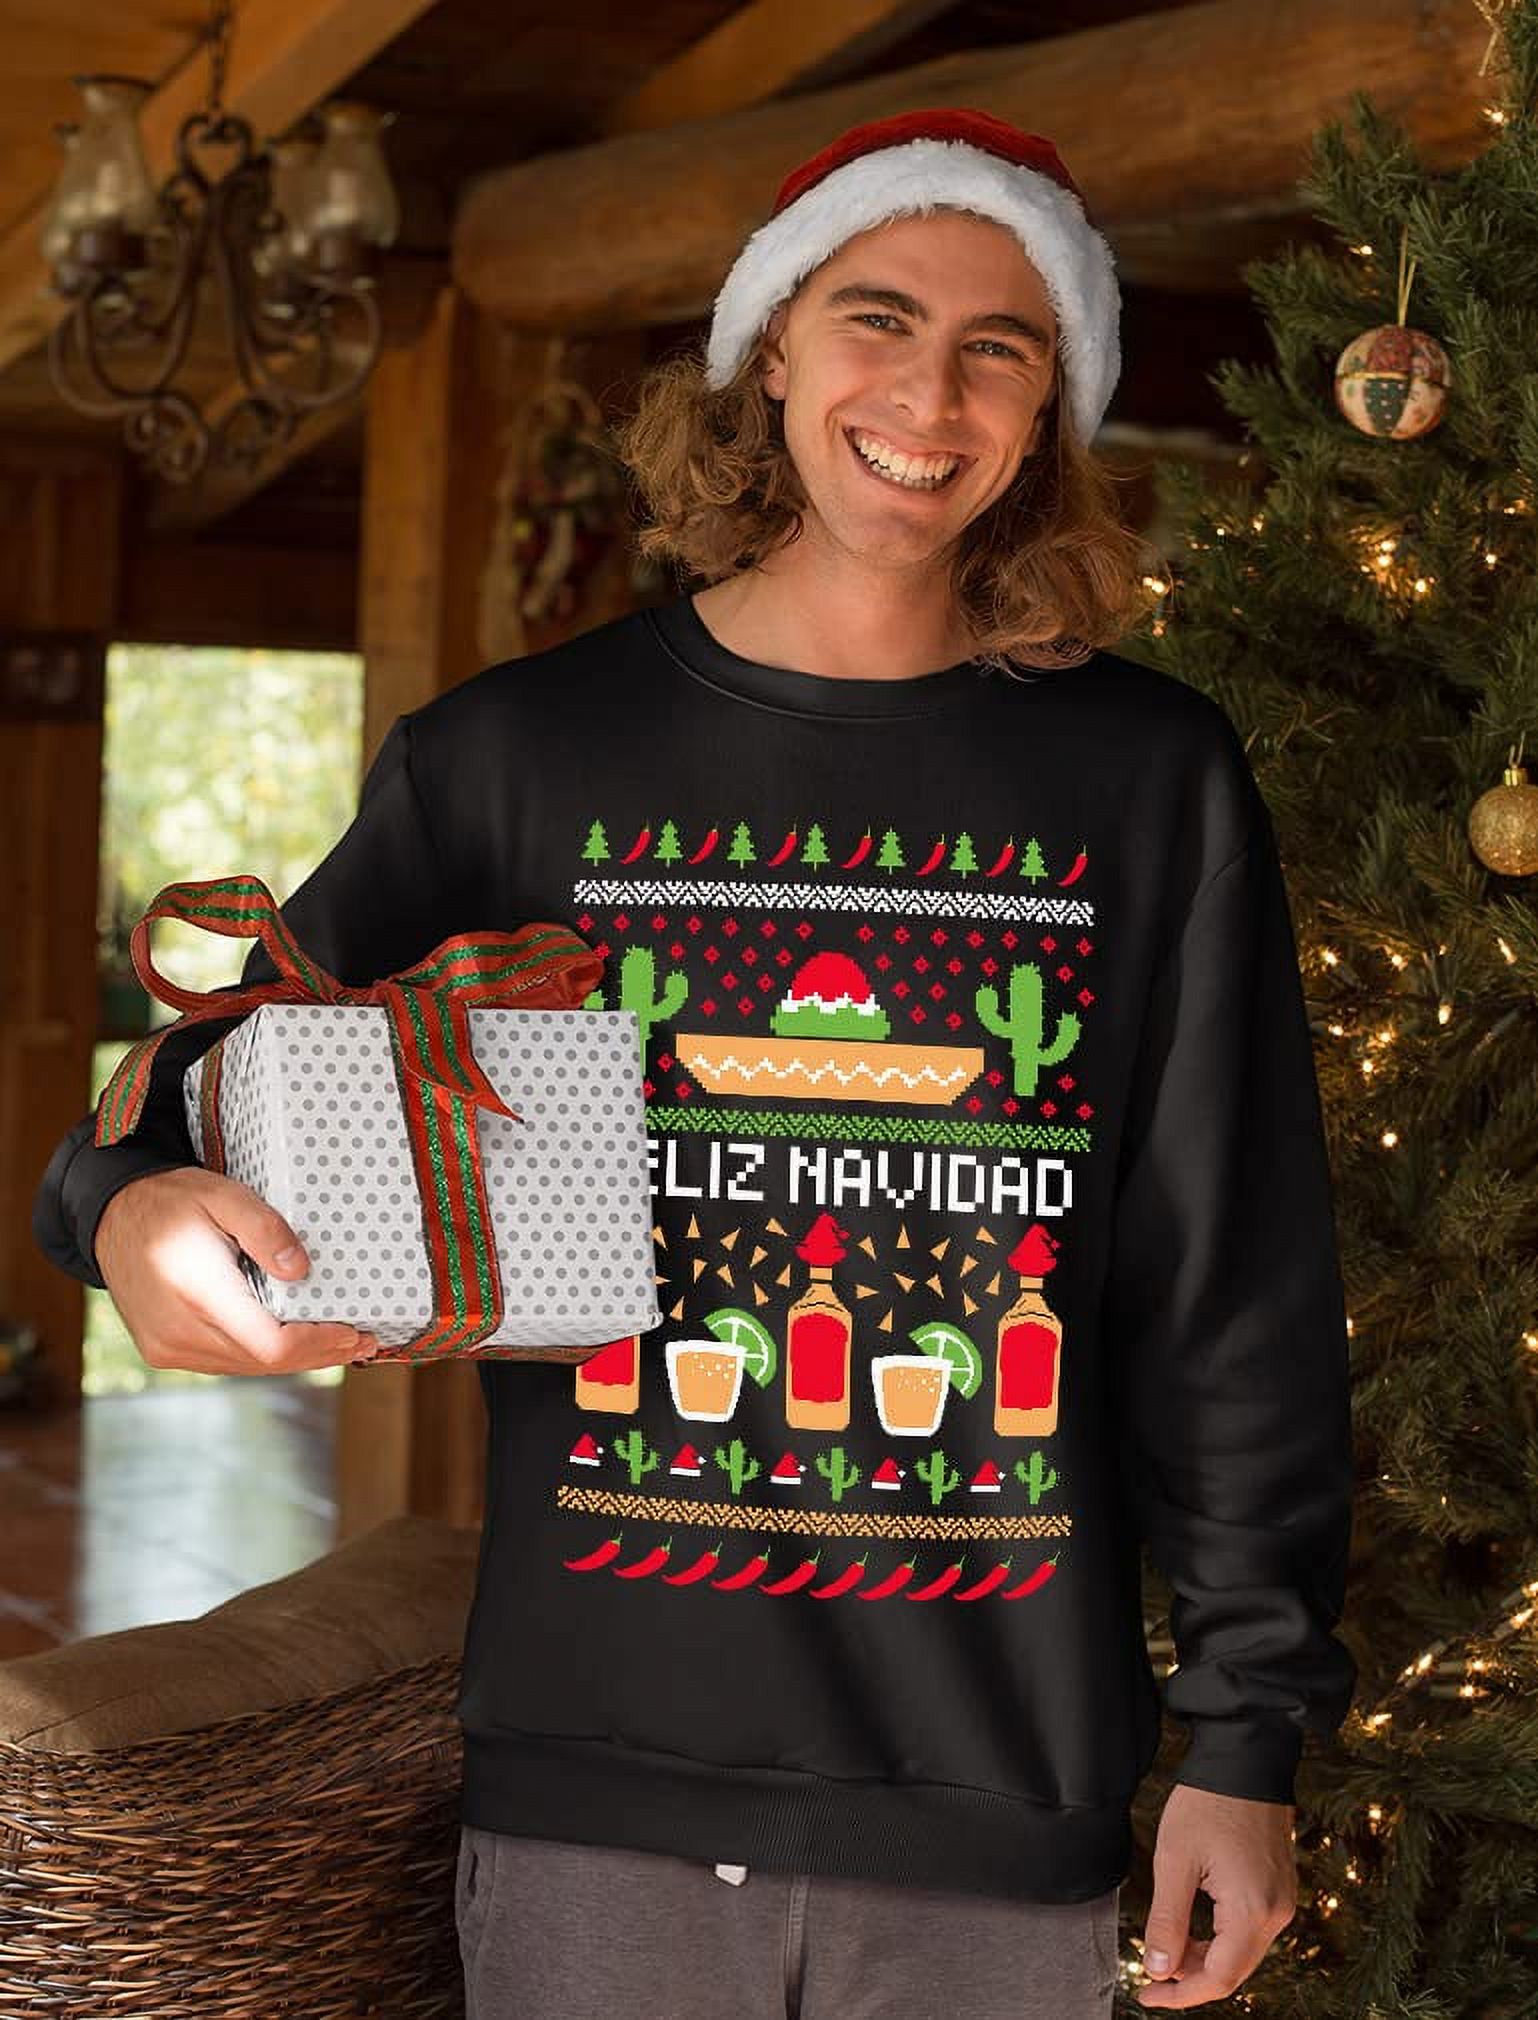 Tstars Mens Ugly Christmas Feliz Navidad Mexican Xmas Gift Christmas Gift Funny Humor Holiday Shirts Xmas Party Christmas Gifts for Him Sweatshirt. - image 4 of 6